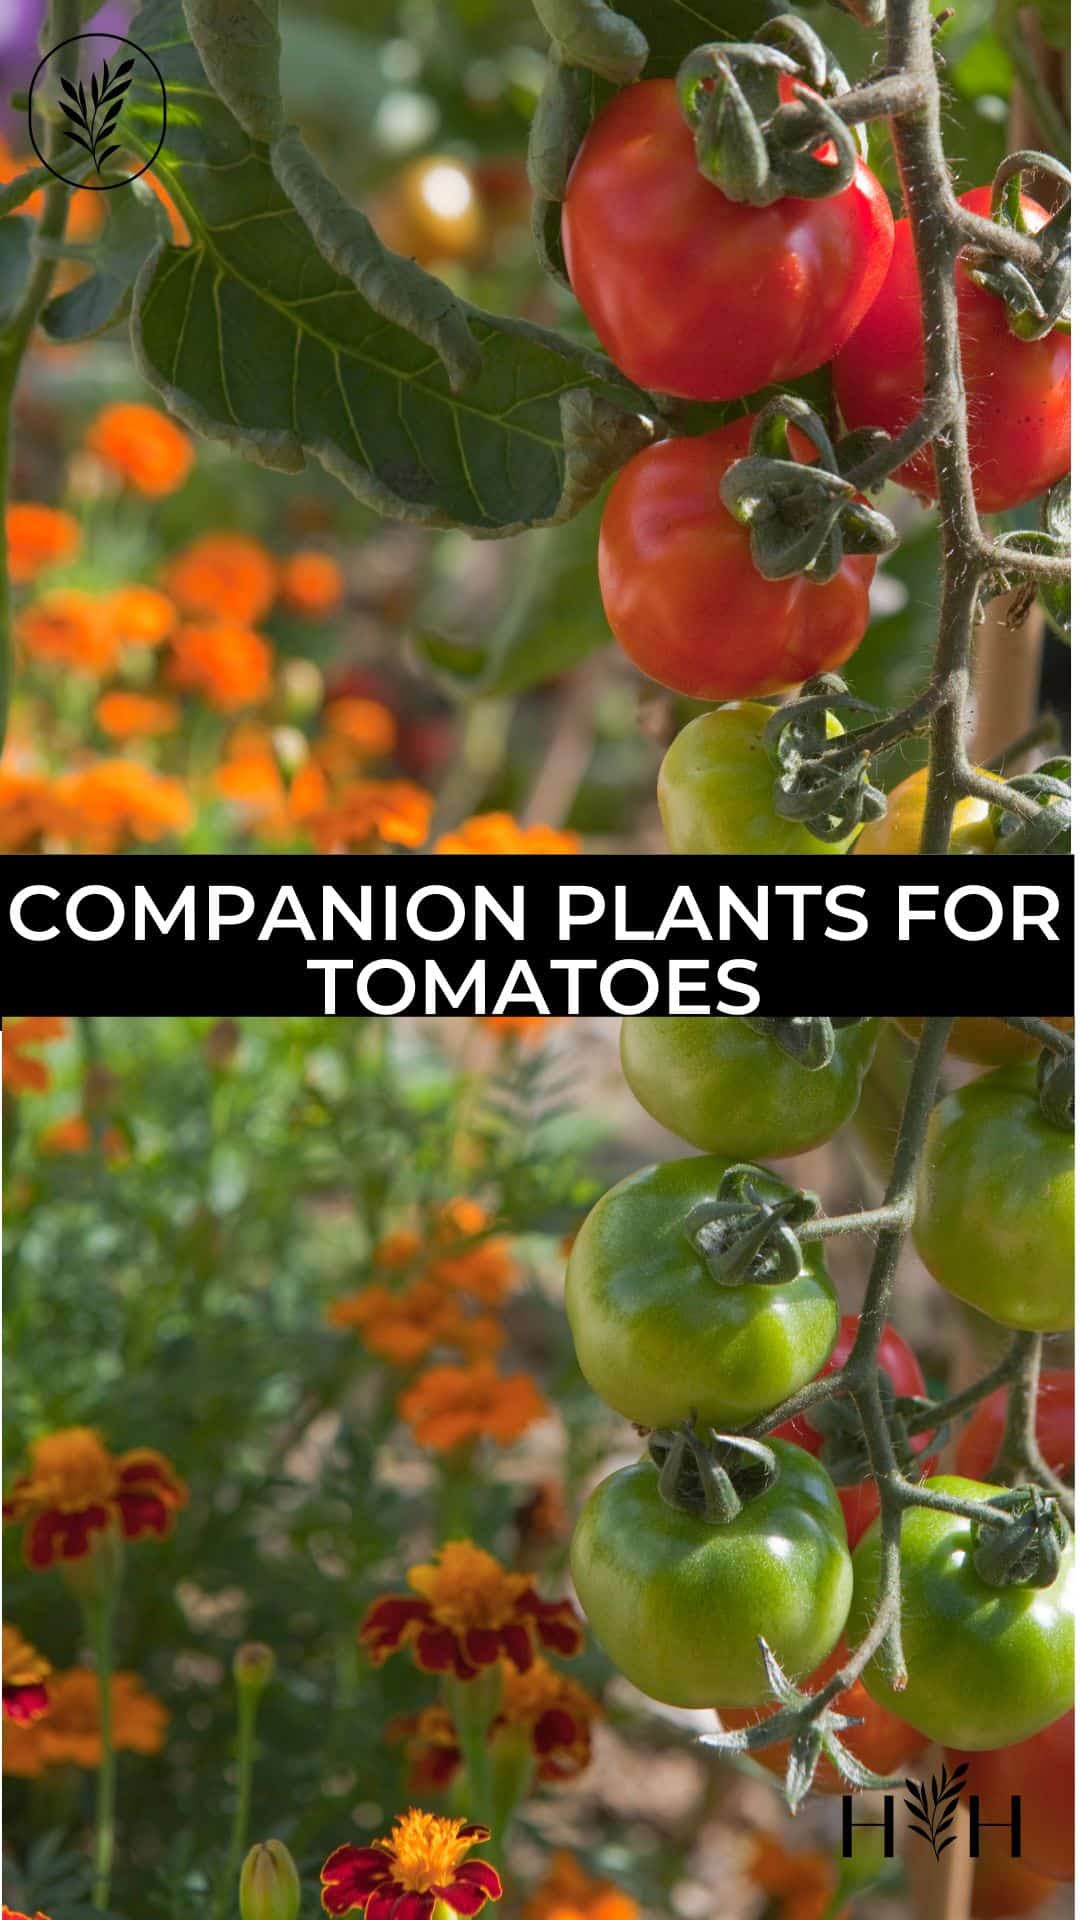 Companion plants for tomatoes via @home4theharvest